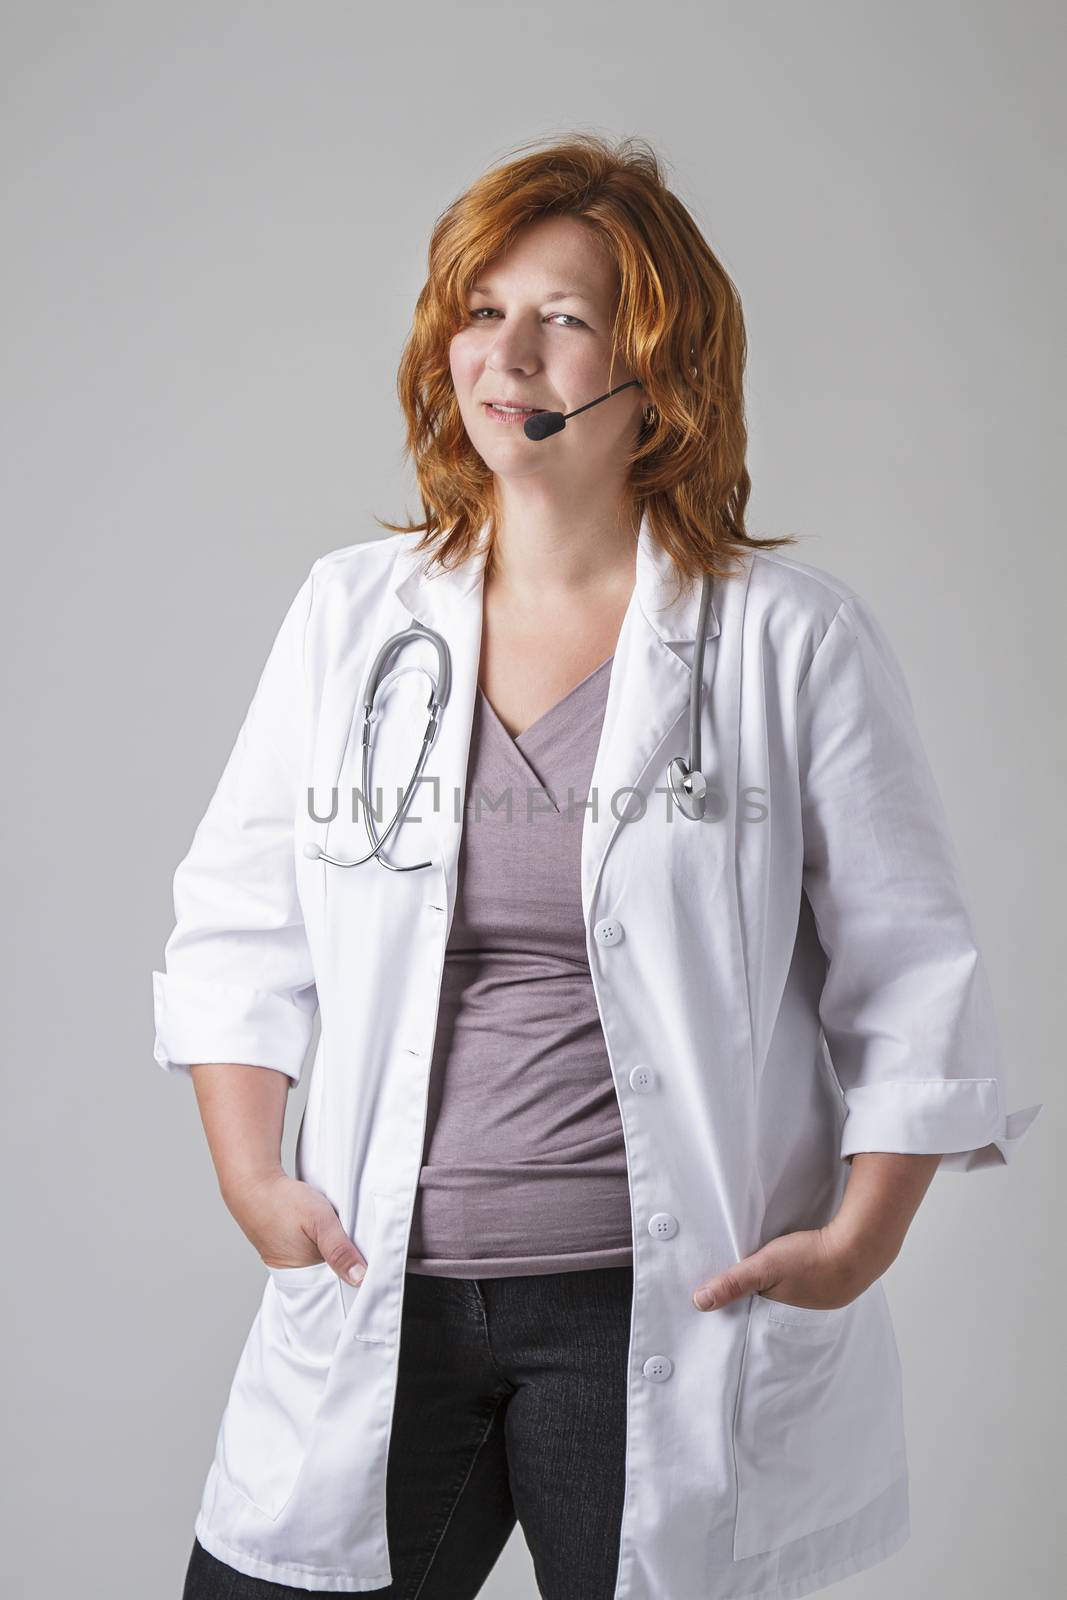 Woman doctor by mypstudio